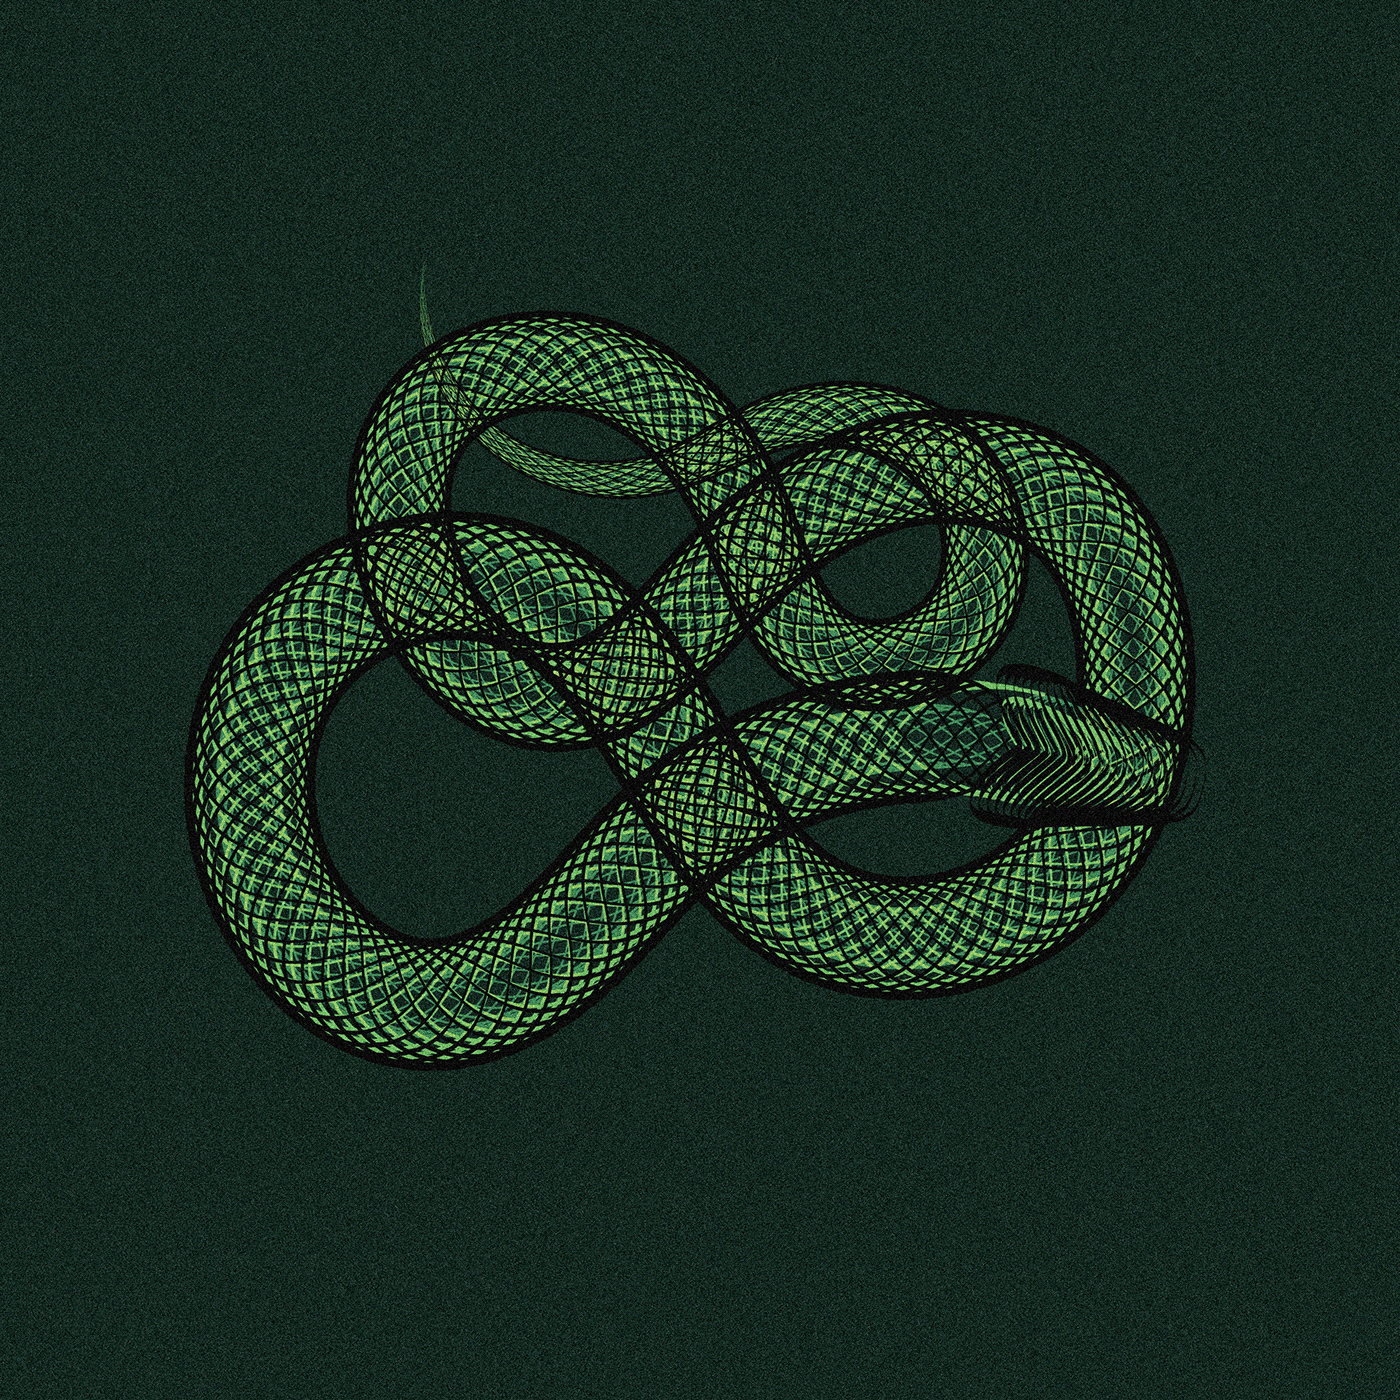 #animals #minimalism #moire #nature #pattern #snakes